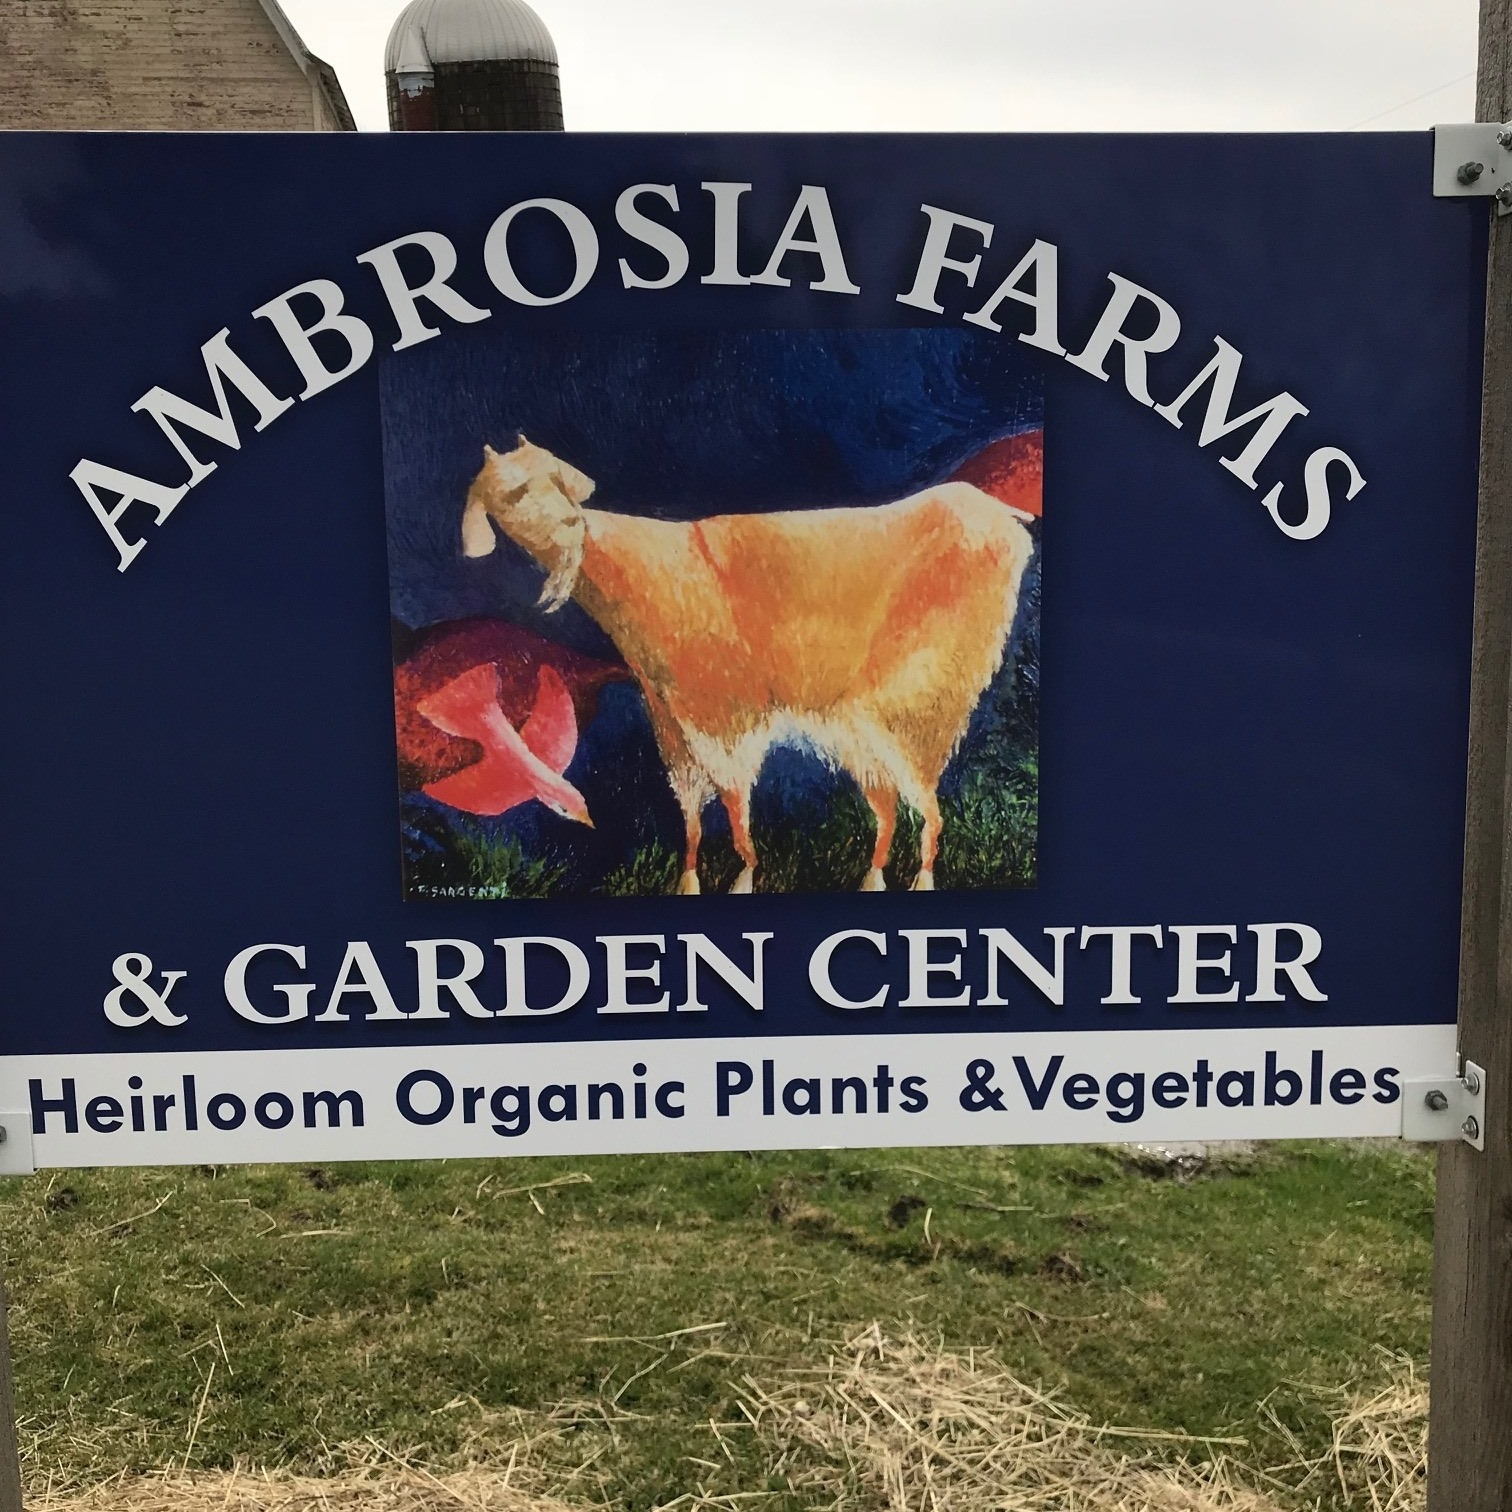 Ambrosia Farms